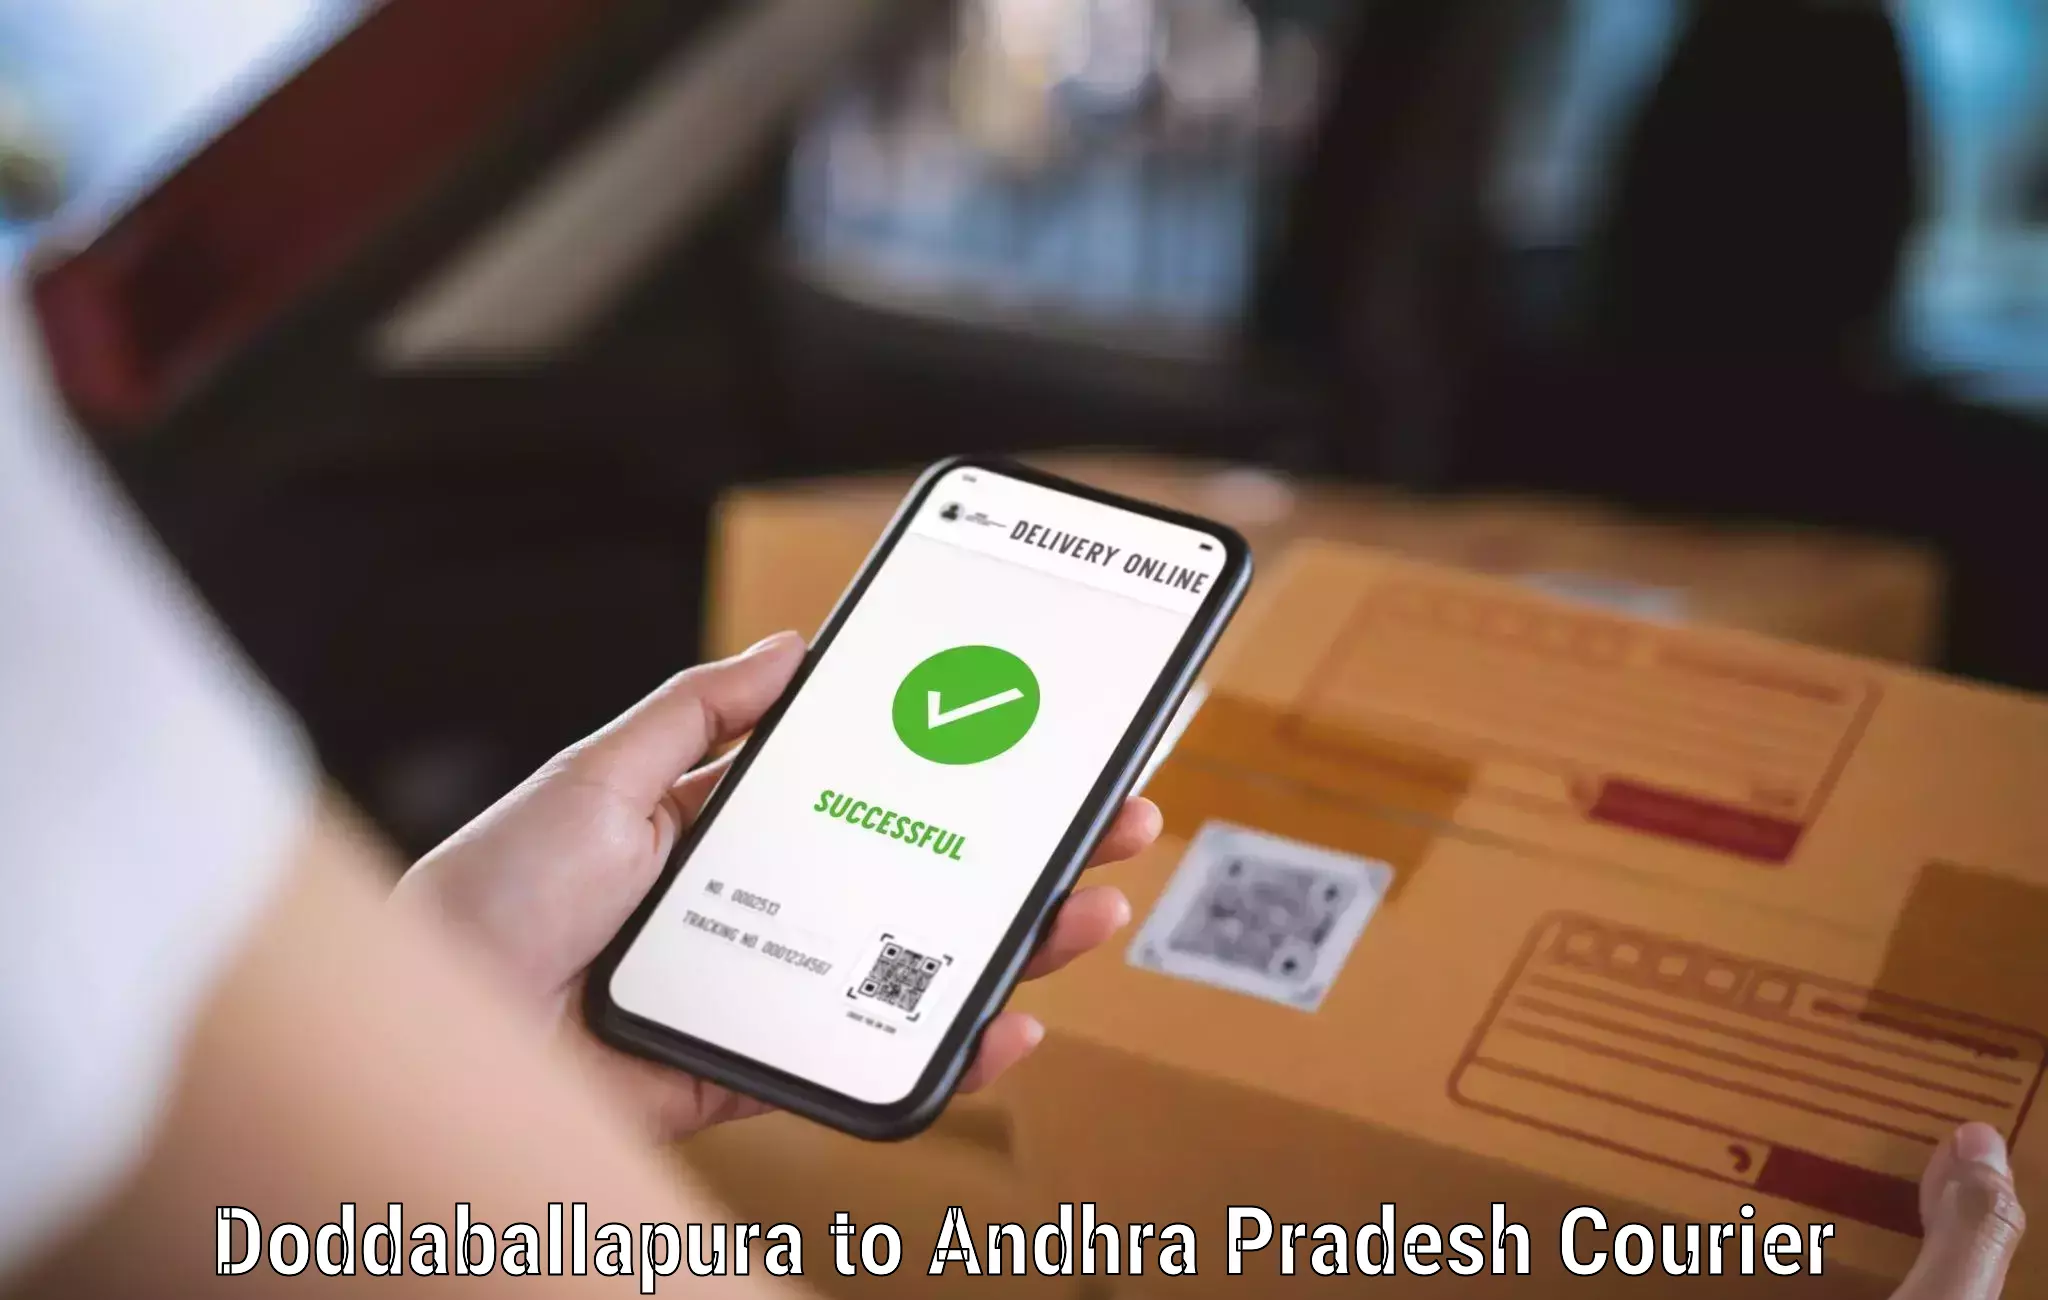 Same-day delivery solutions Doddaballapura to Sarvepalli Nellore